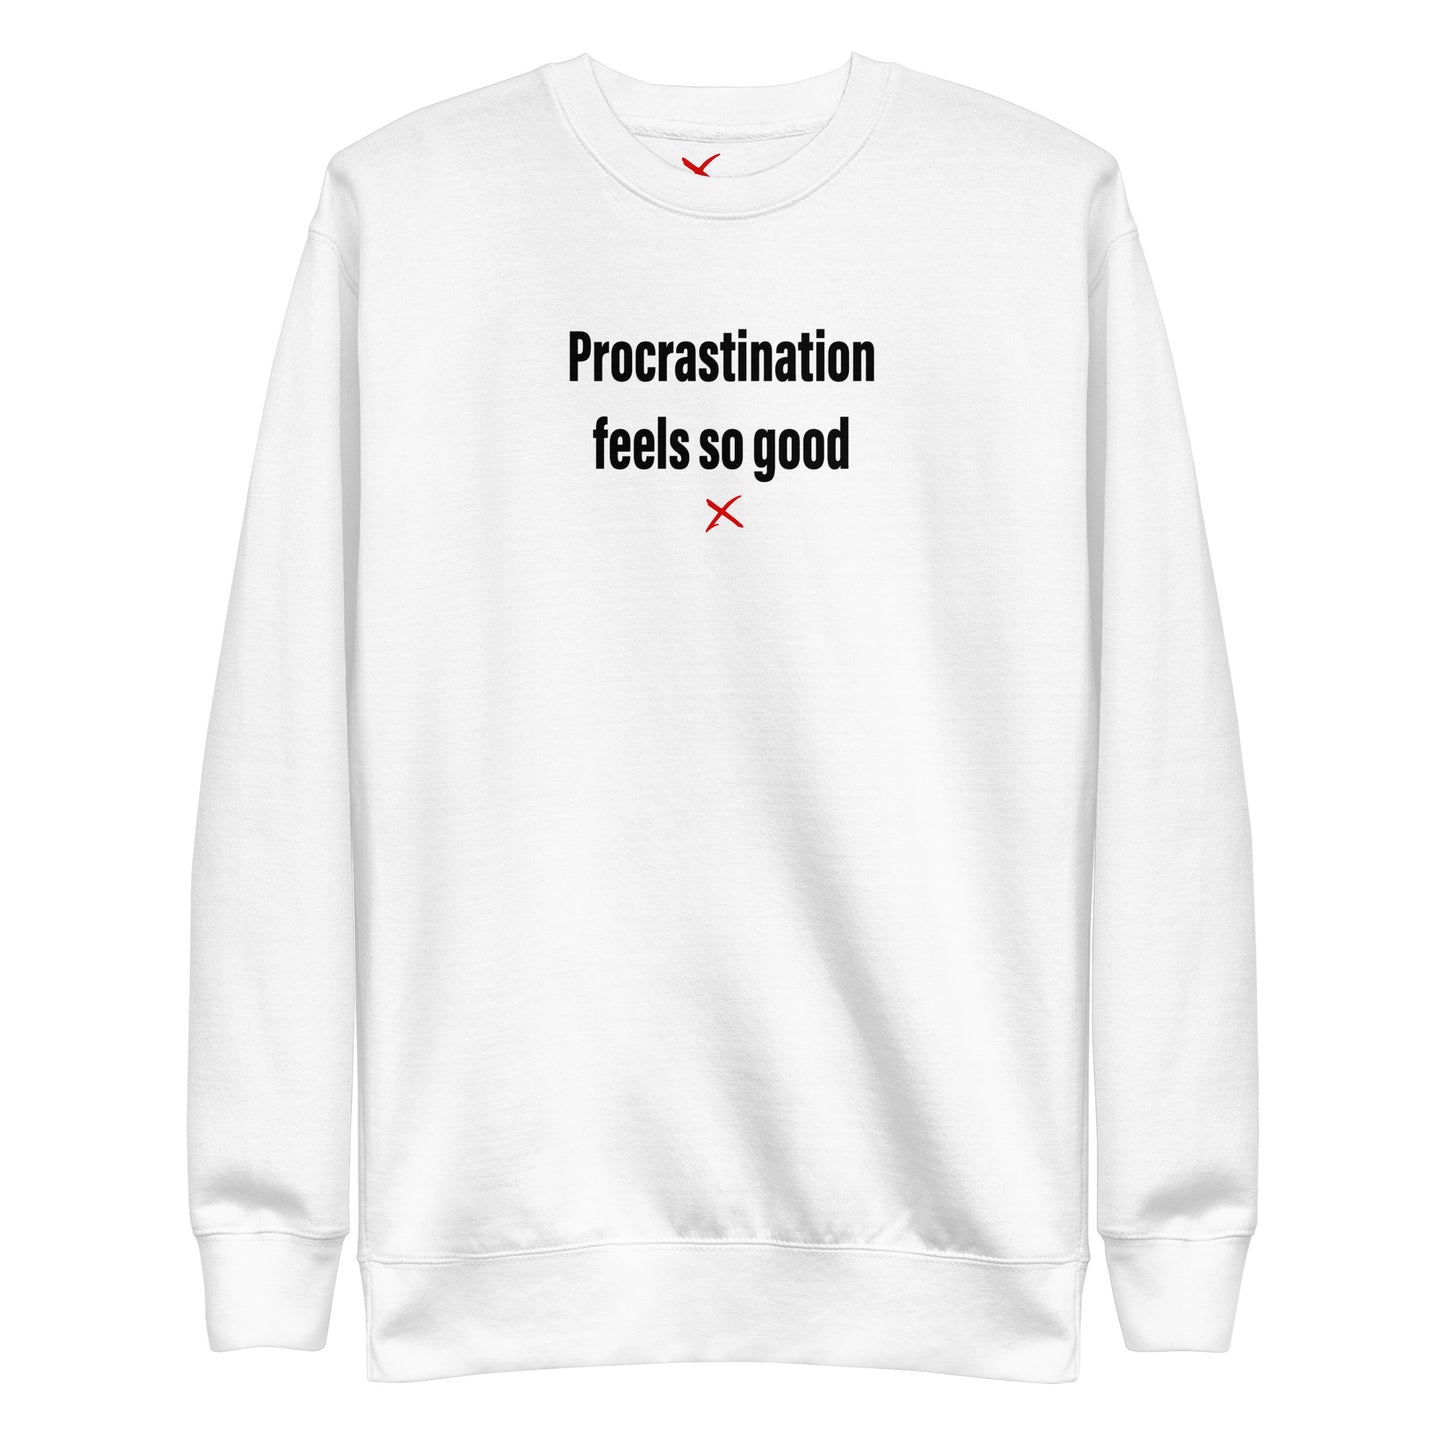 Procrastination feels so good - Sweatshirt